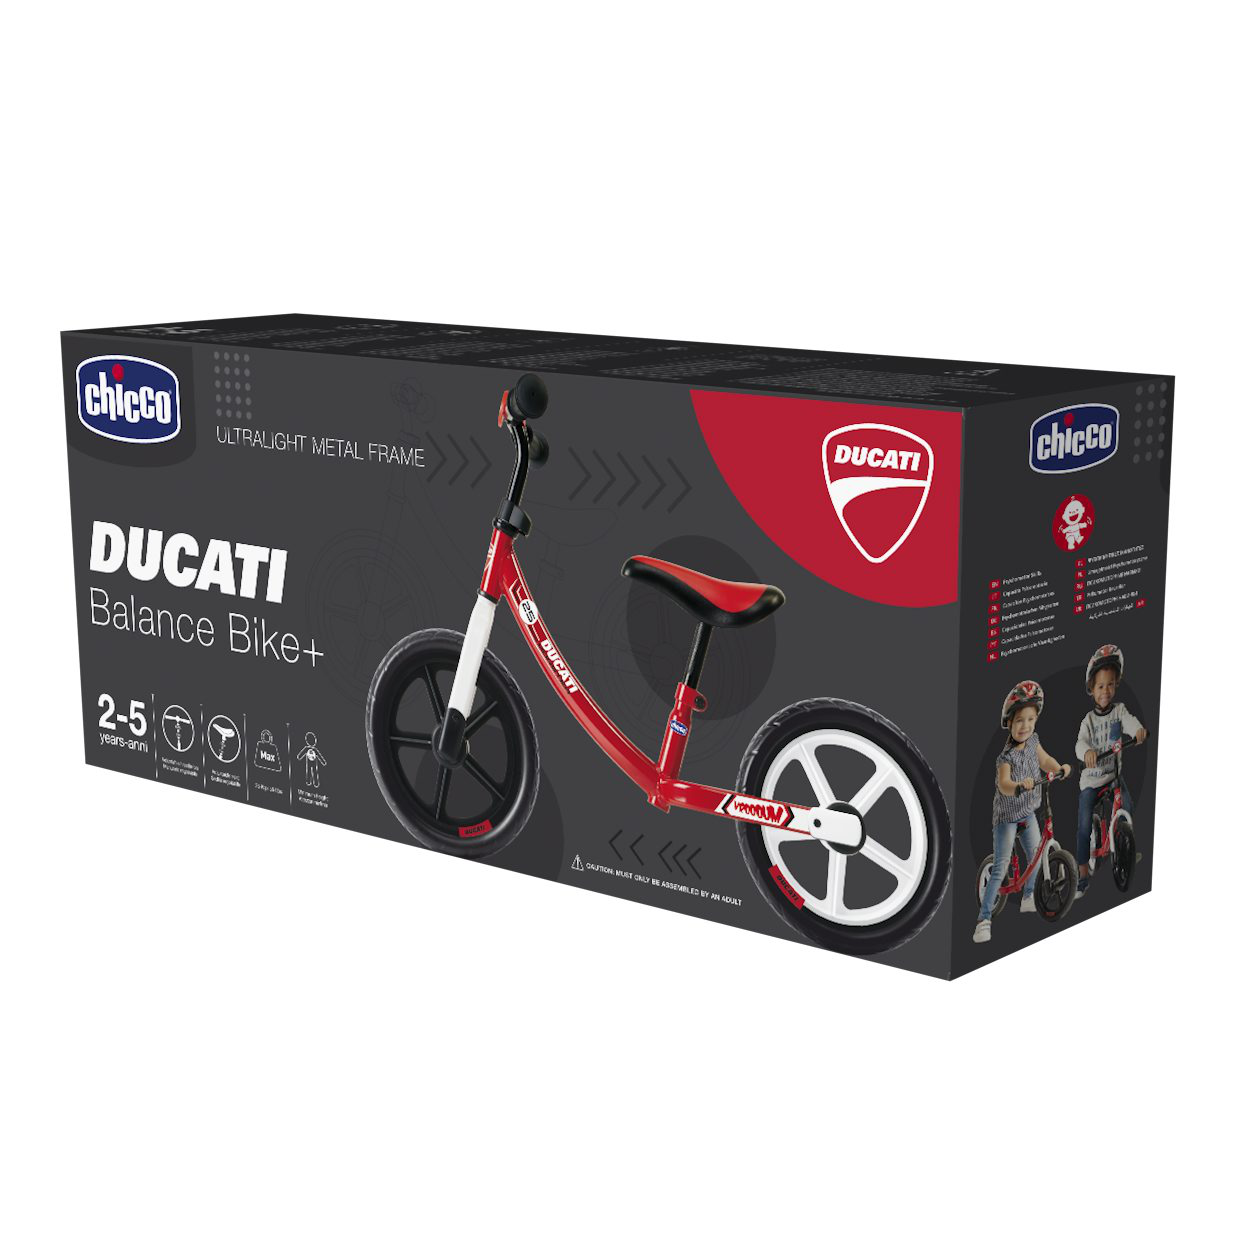 Ducati balance bike+ - Chicco